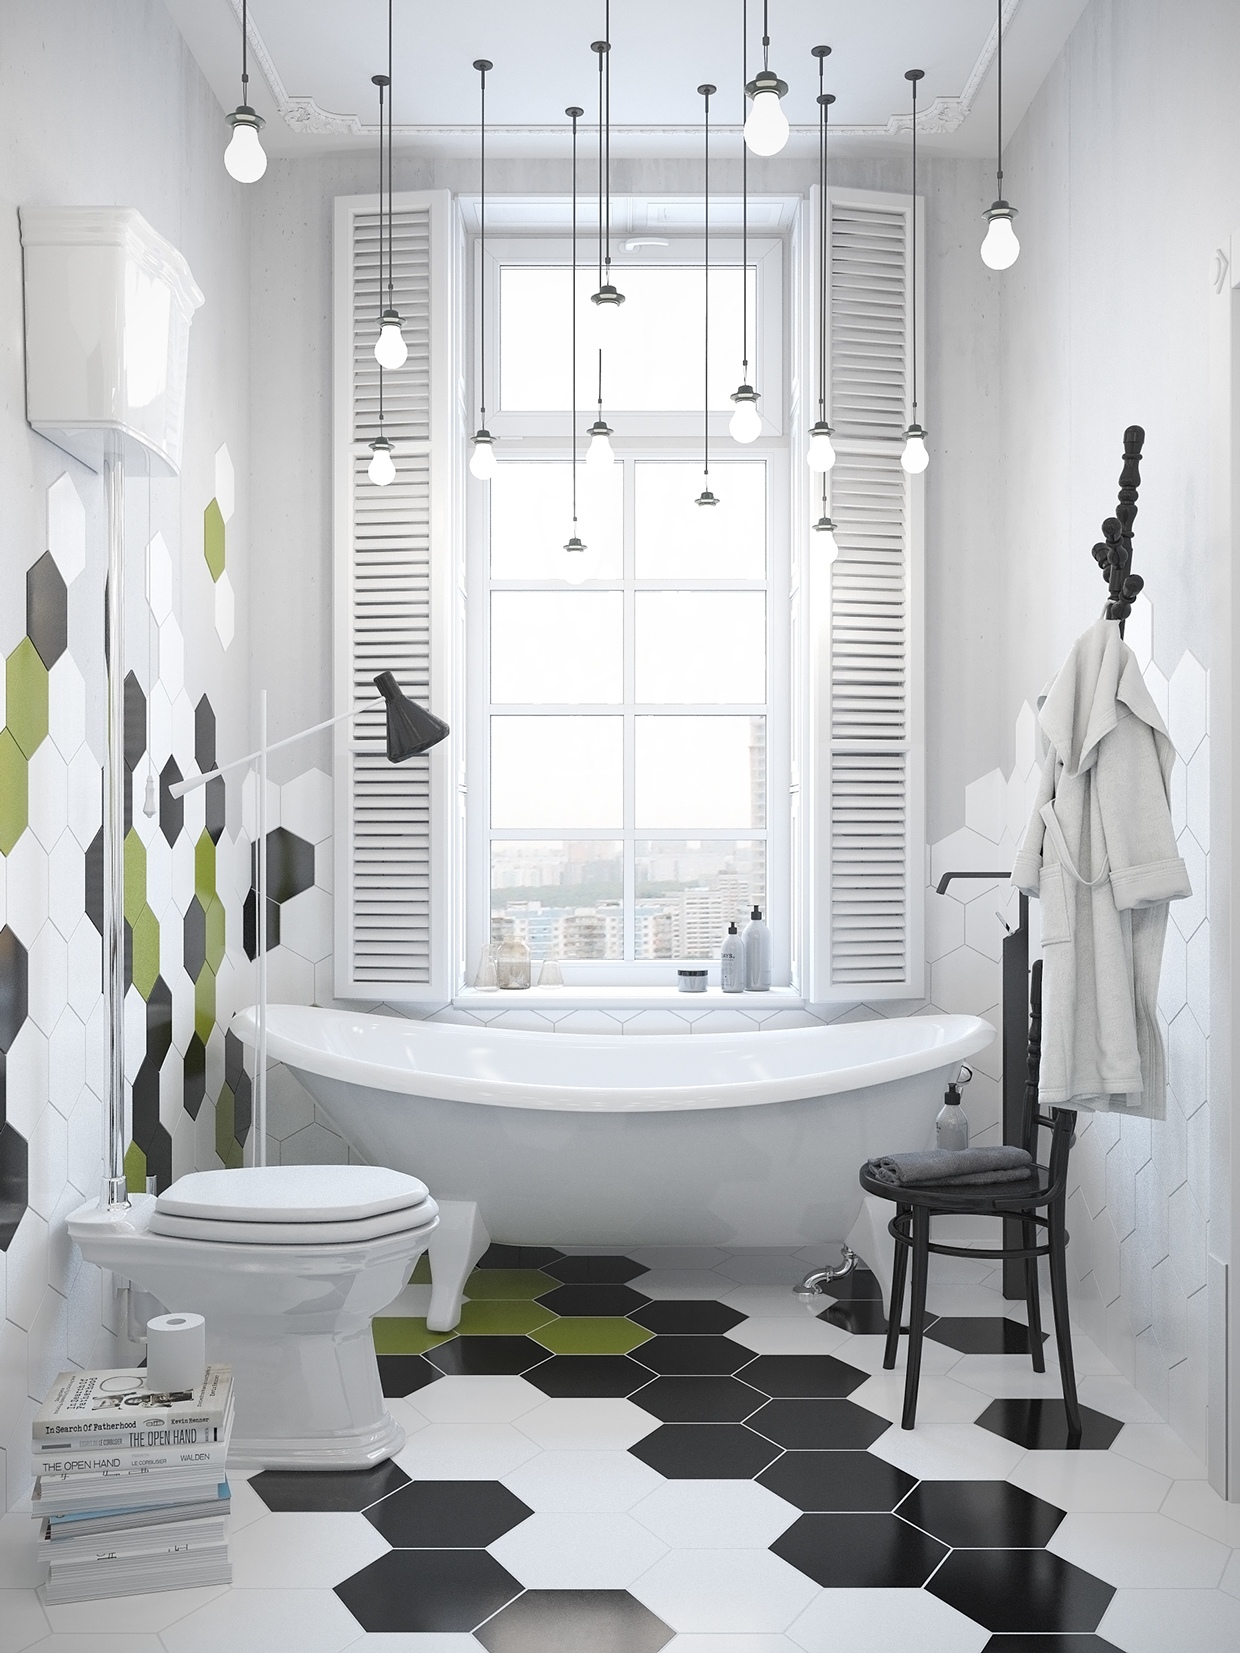 Nice bathroom ideas "width =" 1240 "height =" 1653 "srcset =" https://mileray.com/wp-content/uploads/2020/05/1588511581_436_Scandinavian-Bedroom-Design-With-Beautiful-Accents-That-Perfect-For-Relaxation.jpg 1240w, https://mileray.com/ wp-content / uploads / 2016/04 / fliesenbad-225x300.jpg 225w, https://mileray.com/wp-content/uploads/2016/04/tile-bathroom-768x1024.jpg 768w, https: // myfashionos. com / wp-content / uploads / 2016/04 / tile-bathroom-696x928.jpg 696w, https://mileray.com/wp-content/uploads/2016/04/tile-bathroom-1068x1424.jpg 1068w, https: //mileray.com/wp-content/uploads/2016/04/tile-bathroom-315x420.jpg 315w "Sizes =" (maximum width: 1240px) 100vw, 1240px